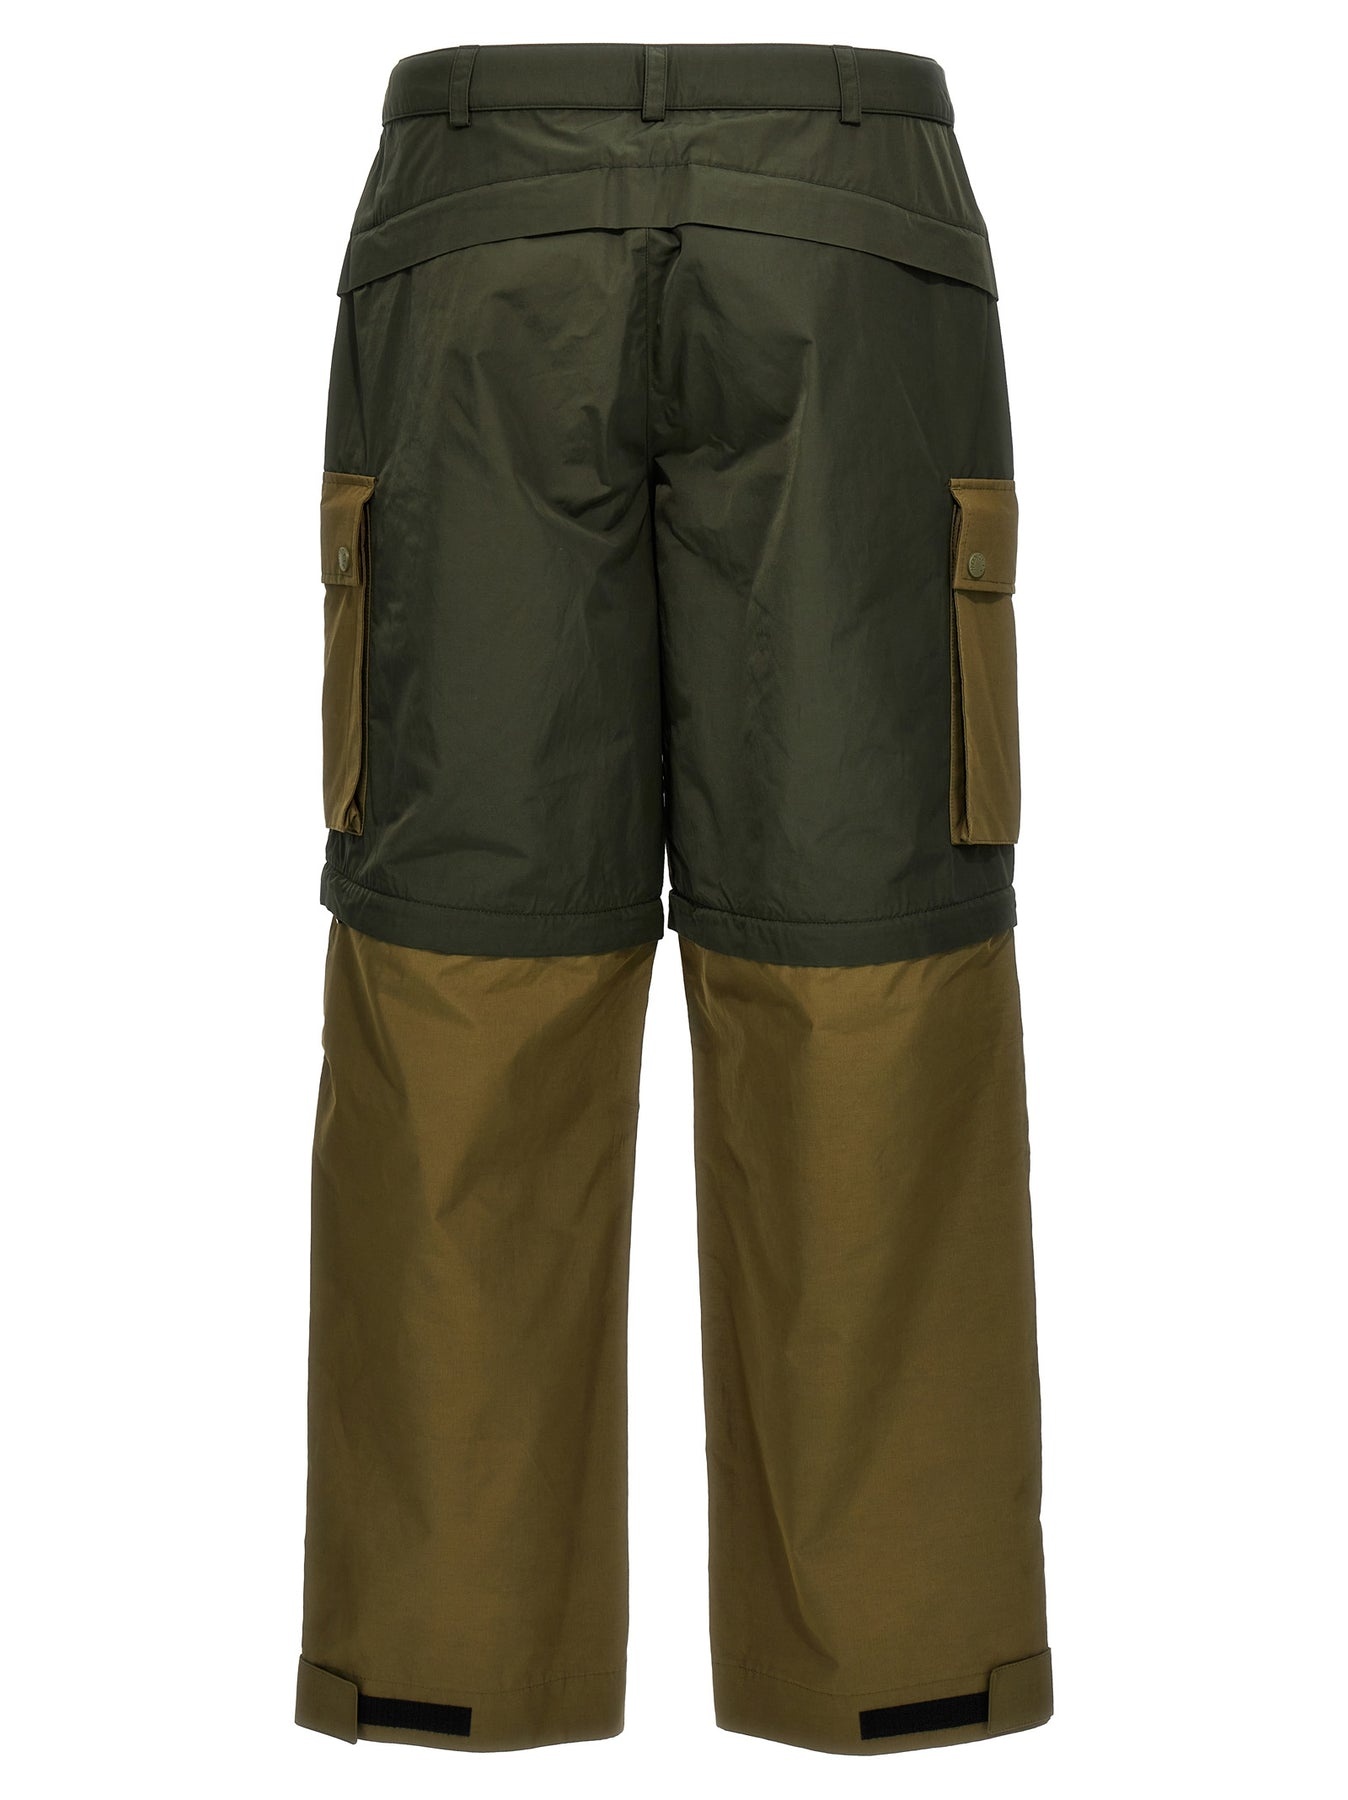 Moncler Genius X Pharrell Williams Trousers Pants Green - 3